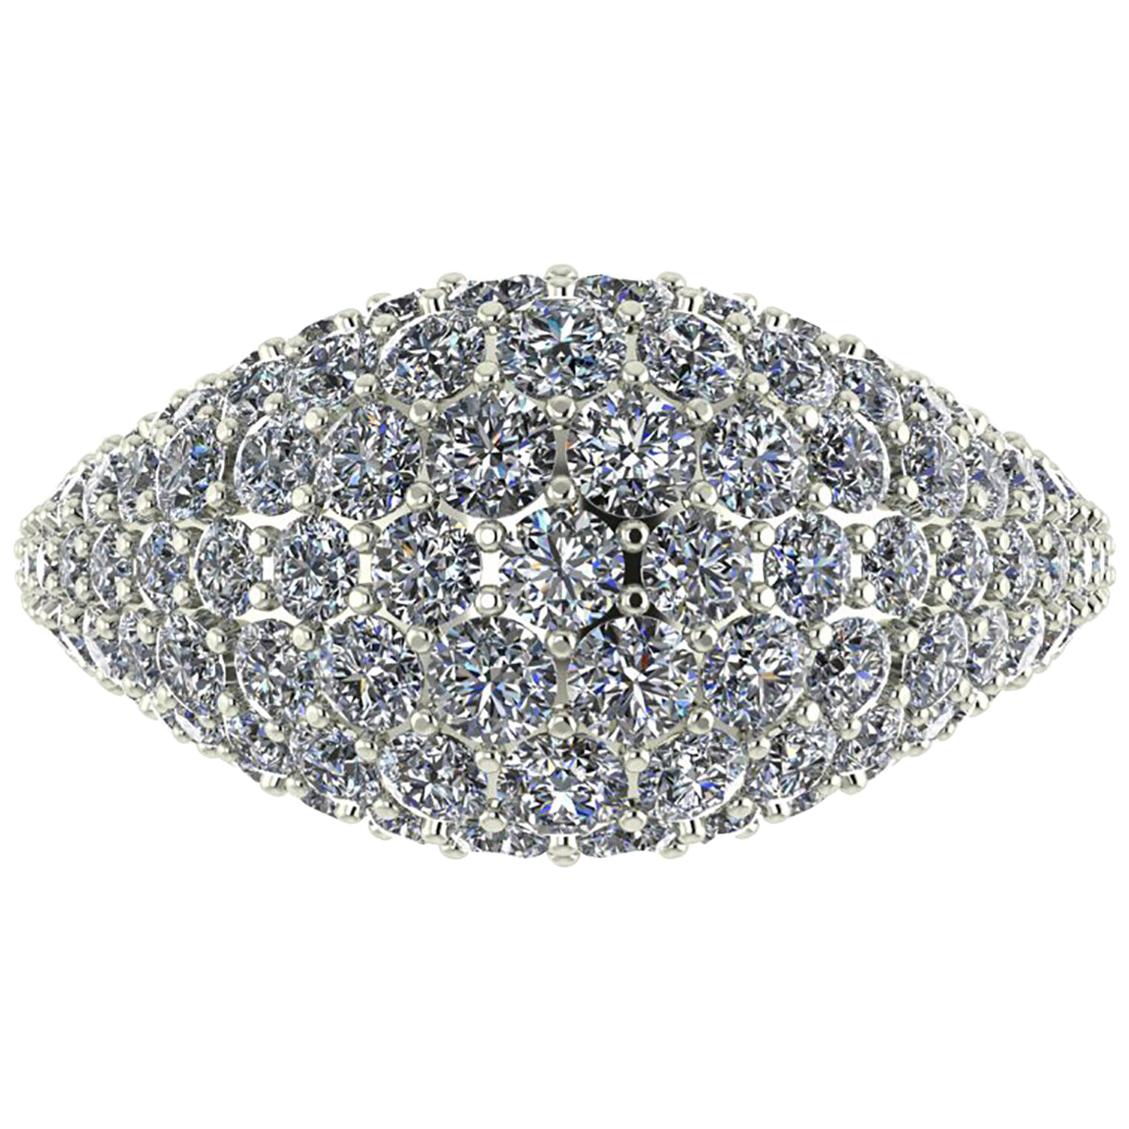  2.5 Carat White Bright Diamonds Dome Ring in 18 Karat white Gold